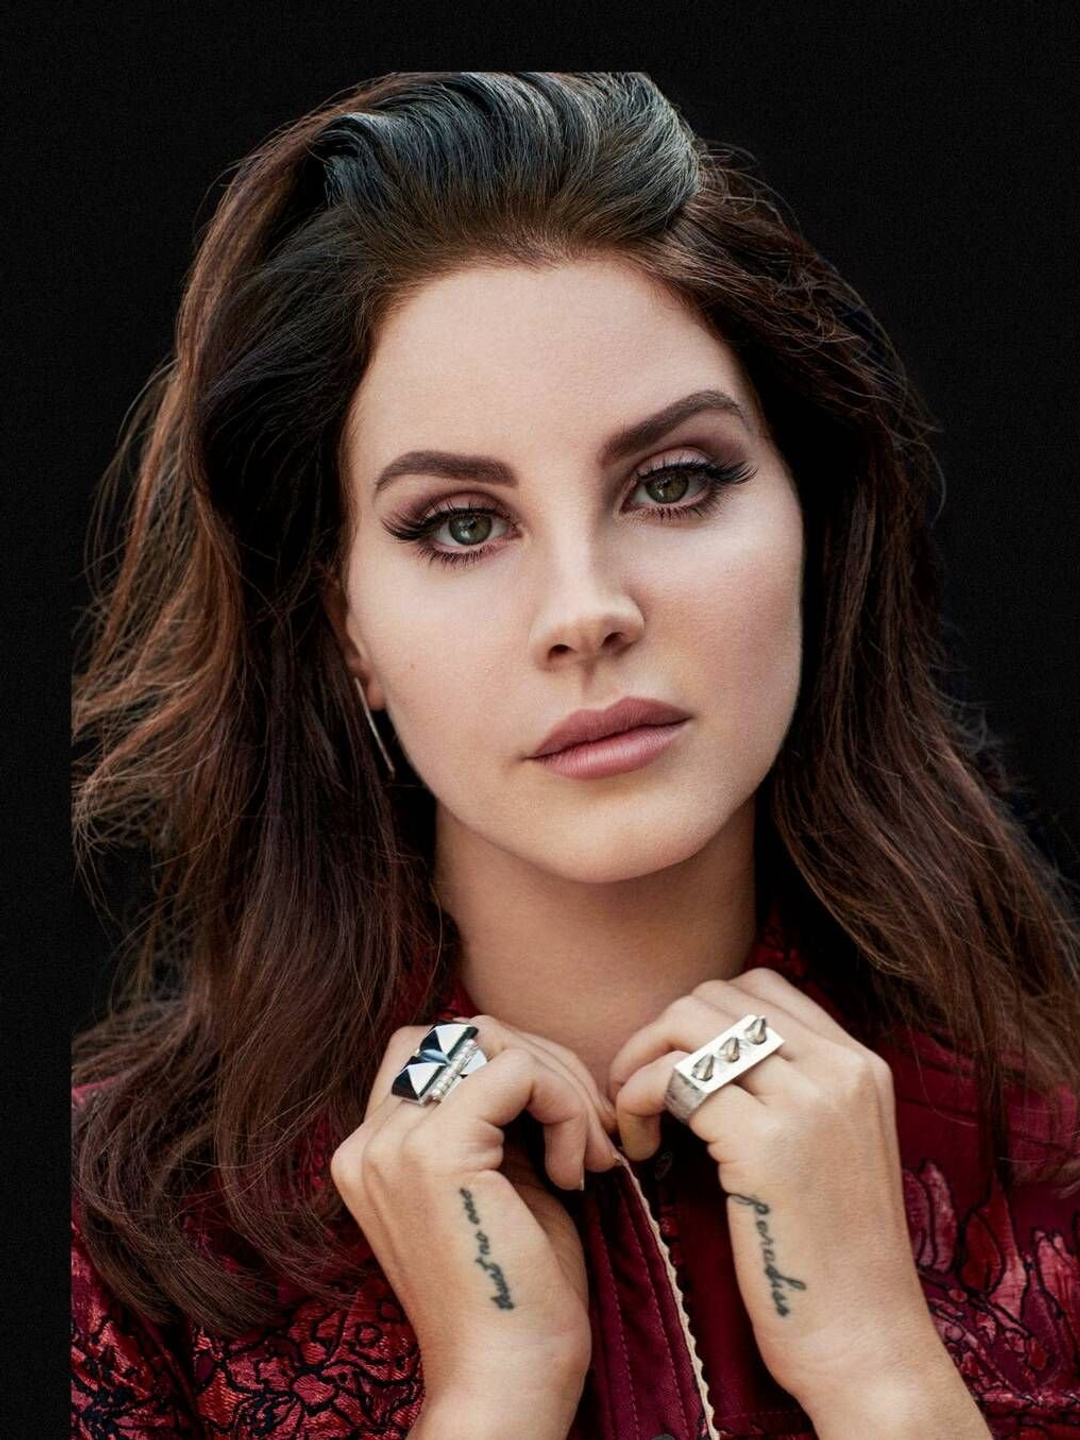 Lana Del Rey biography